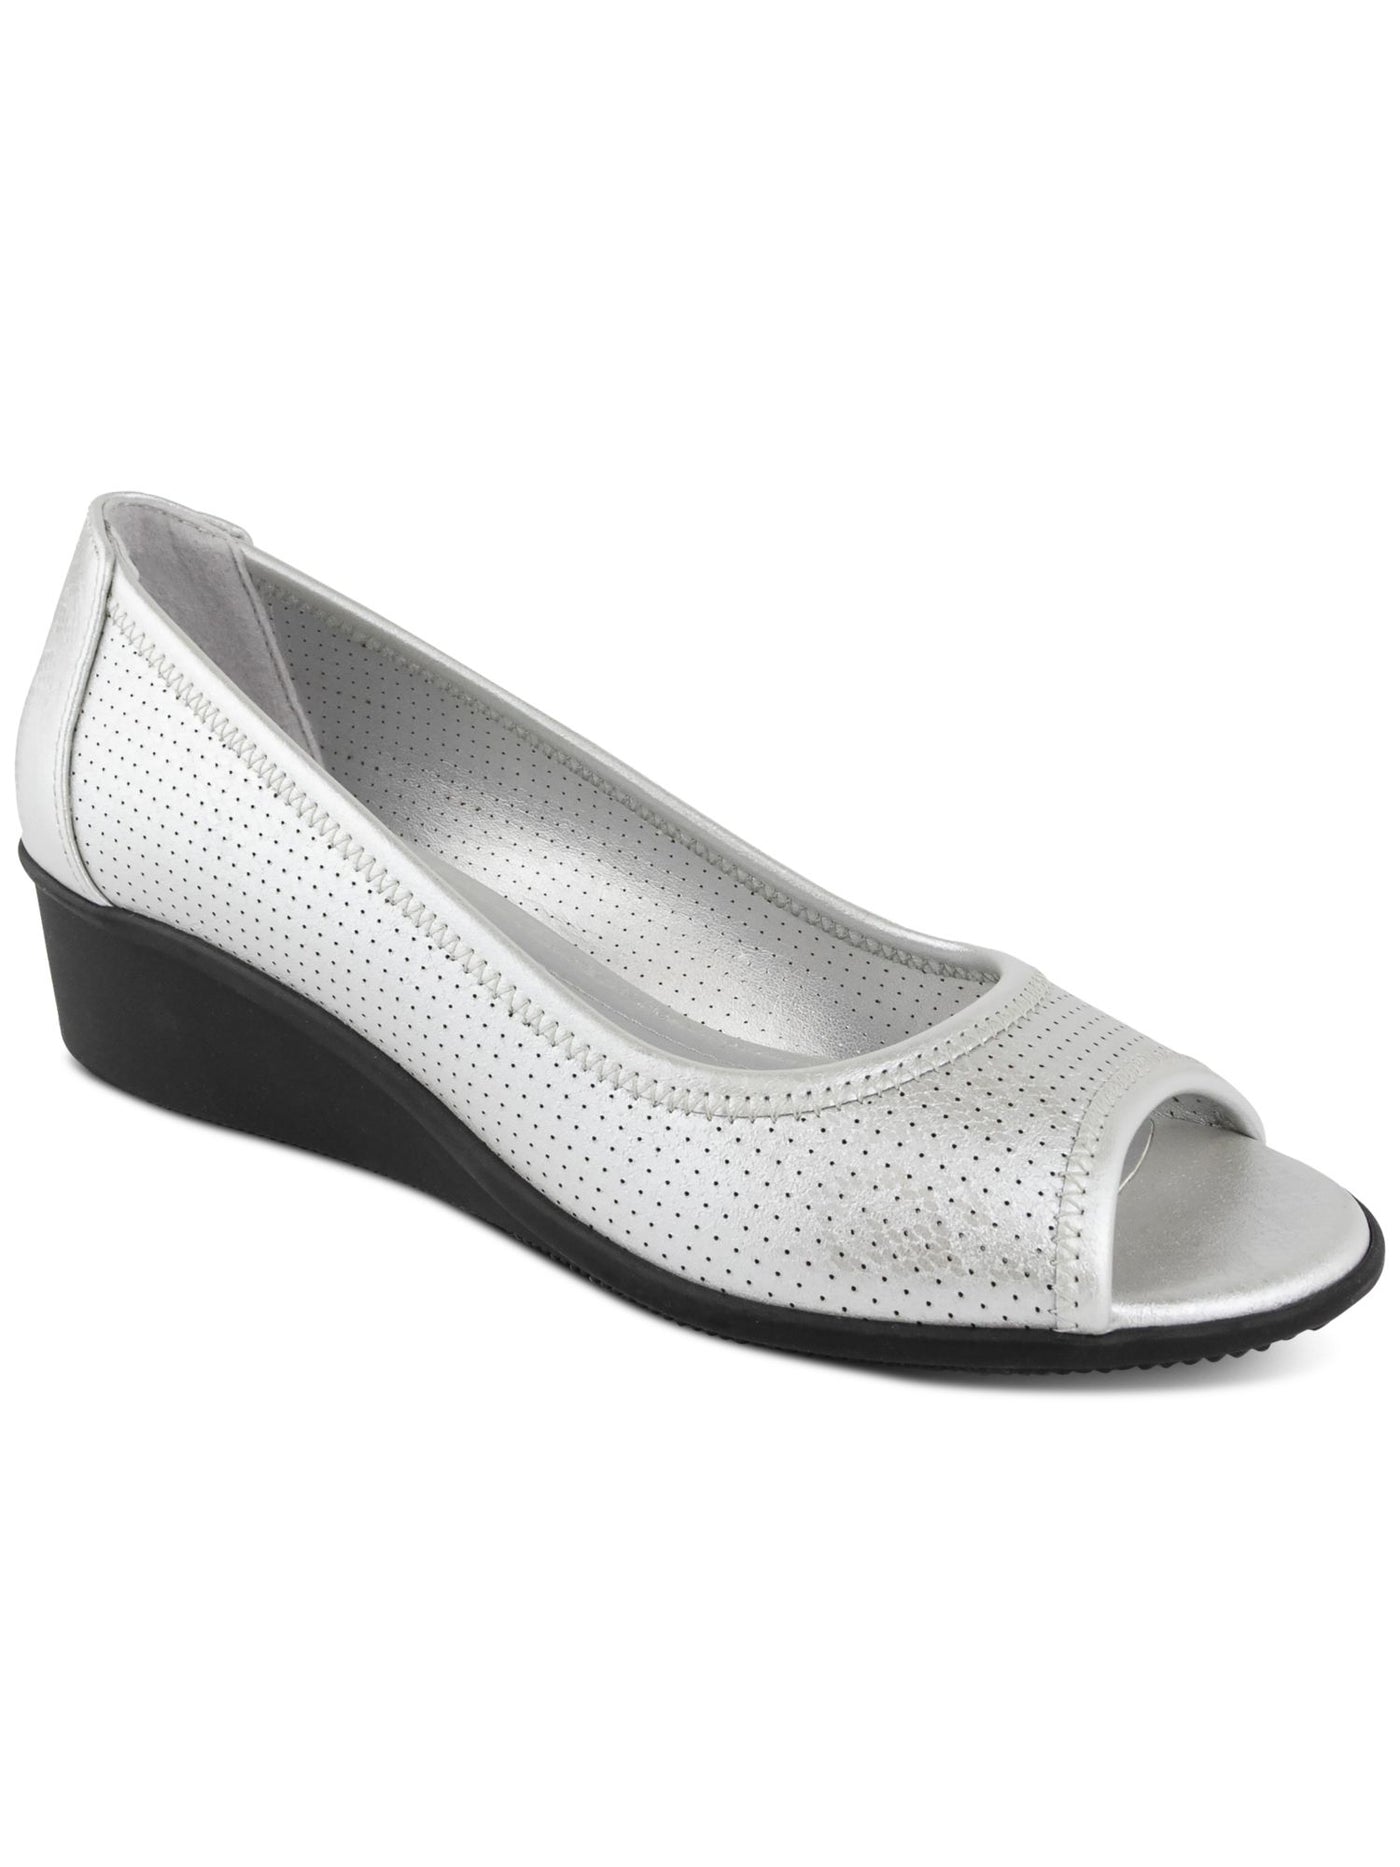 KAREN SCOTT Womens Silver Perforated Padded Yaritza Peep Toe Wedge Slip On Pumps Shoes 11 M